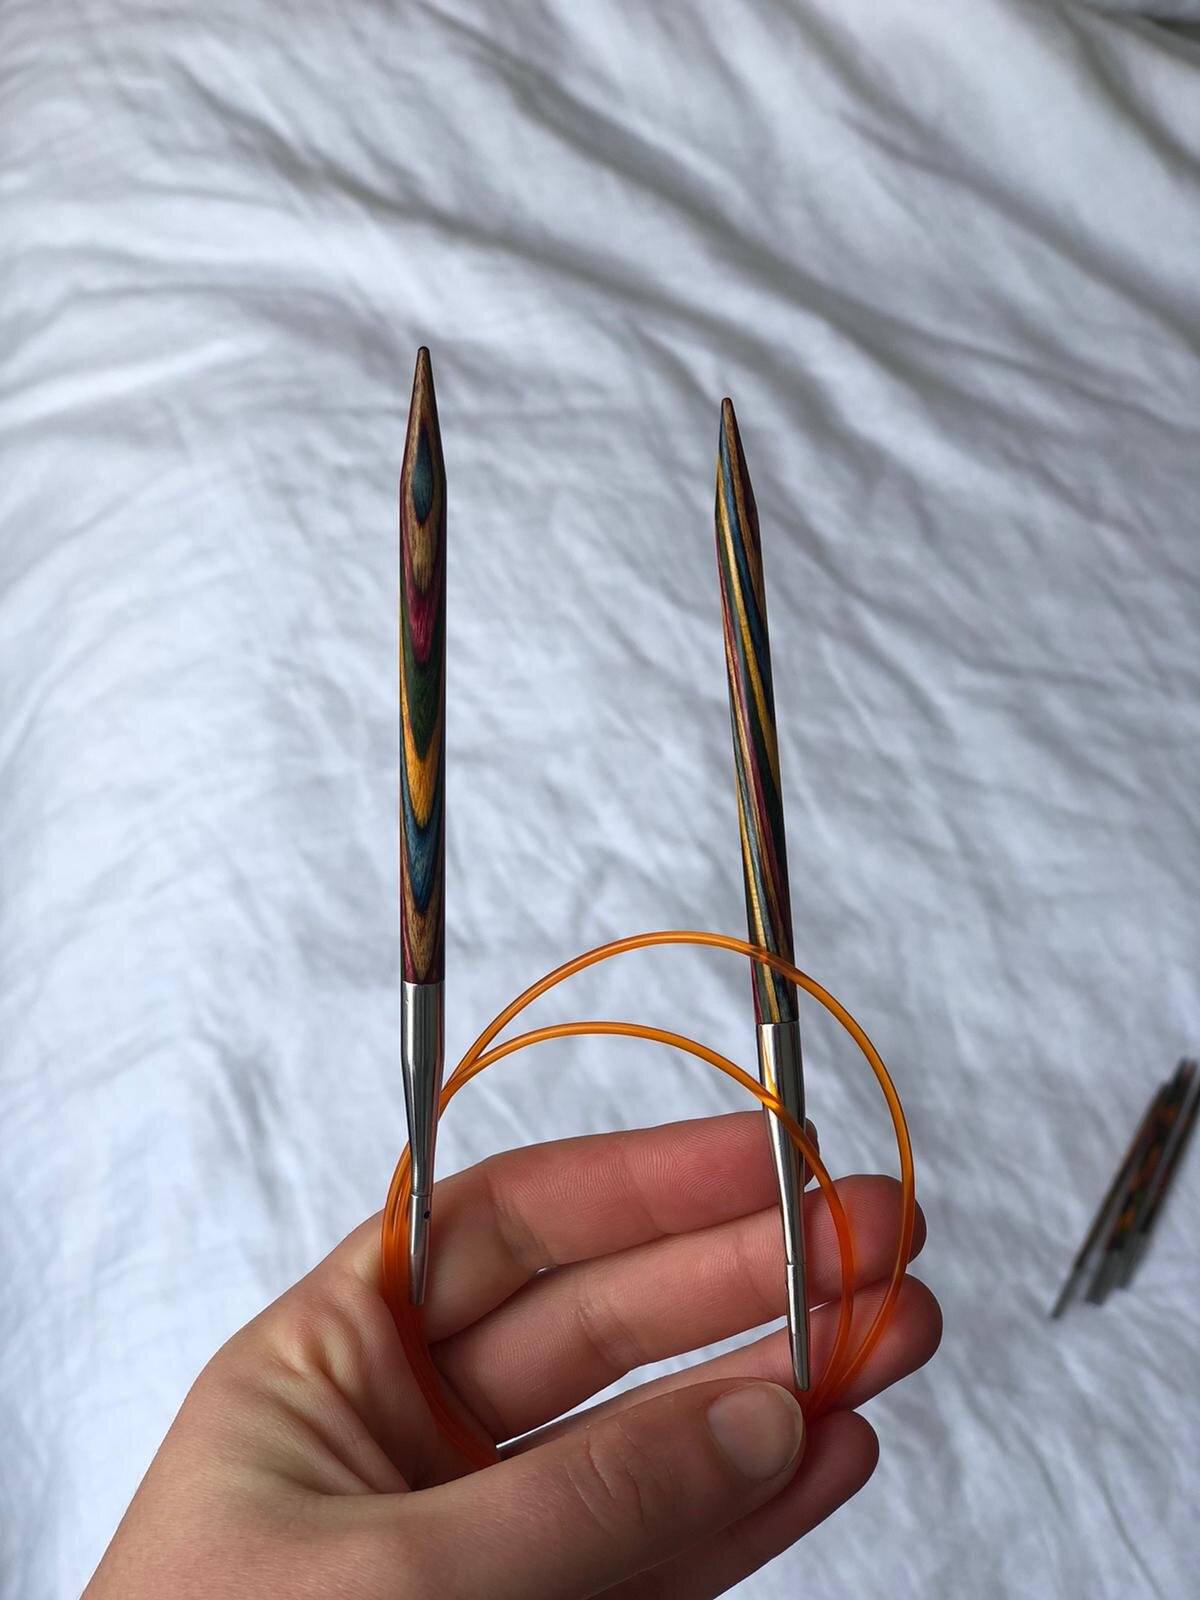 Knit Pro Symfonie Interchangeable Knitting Needles